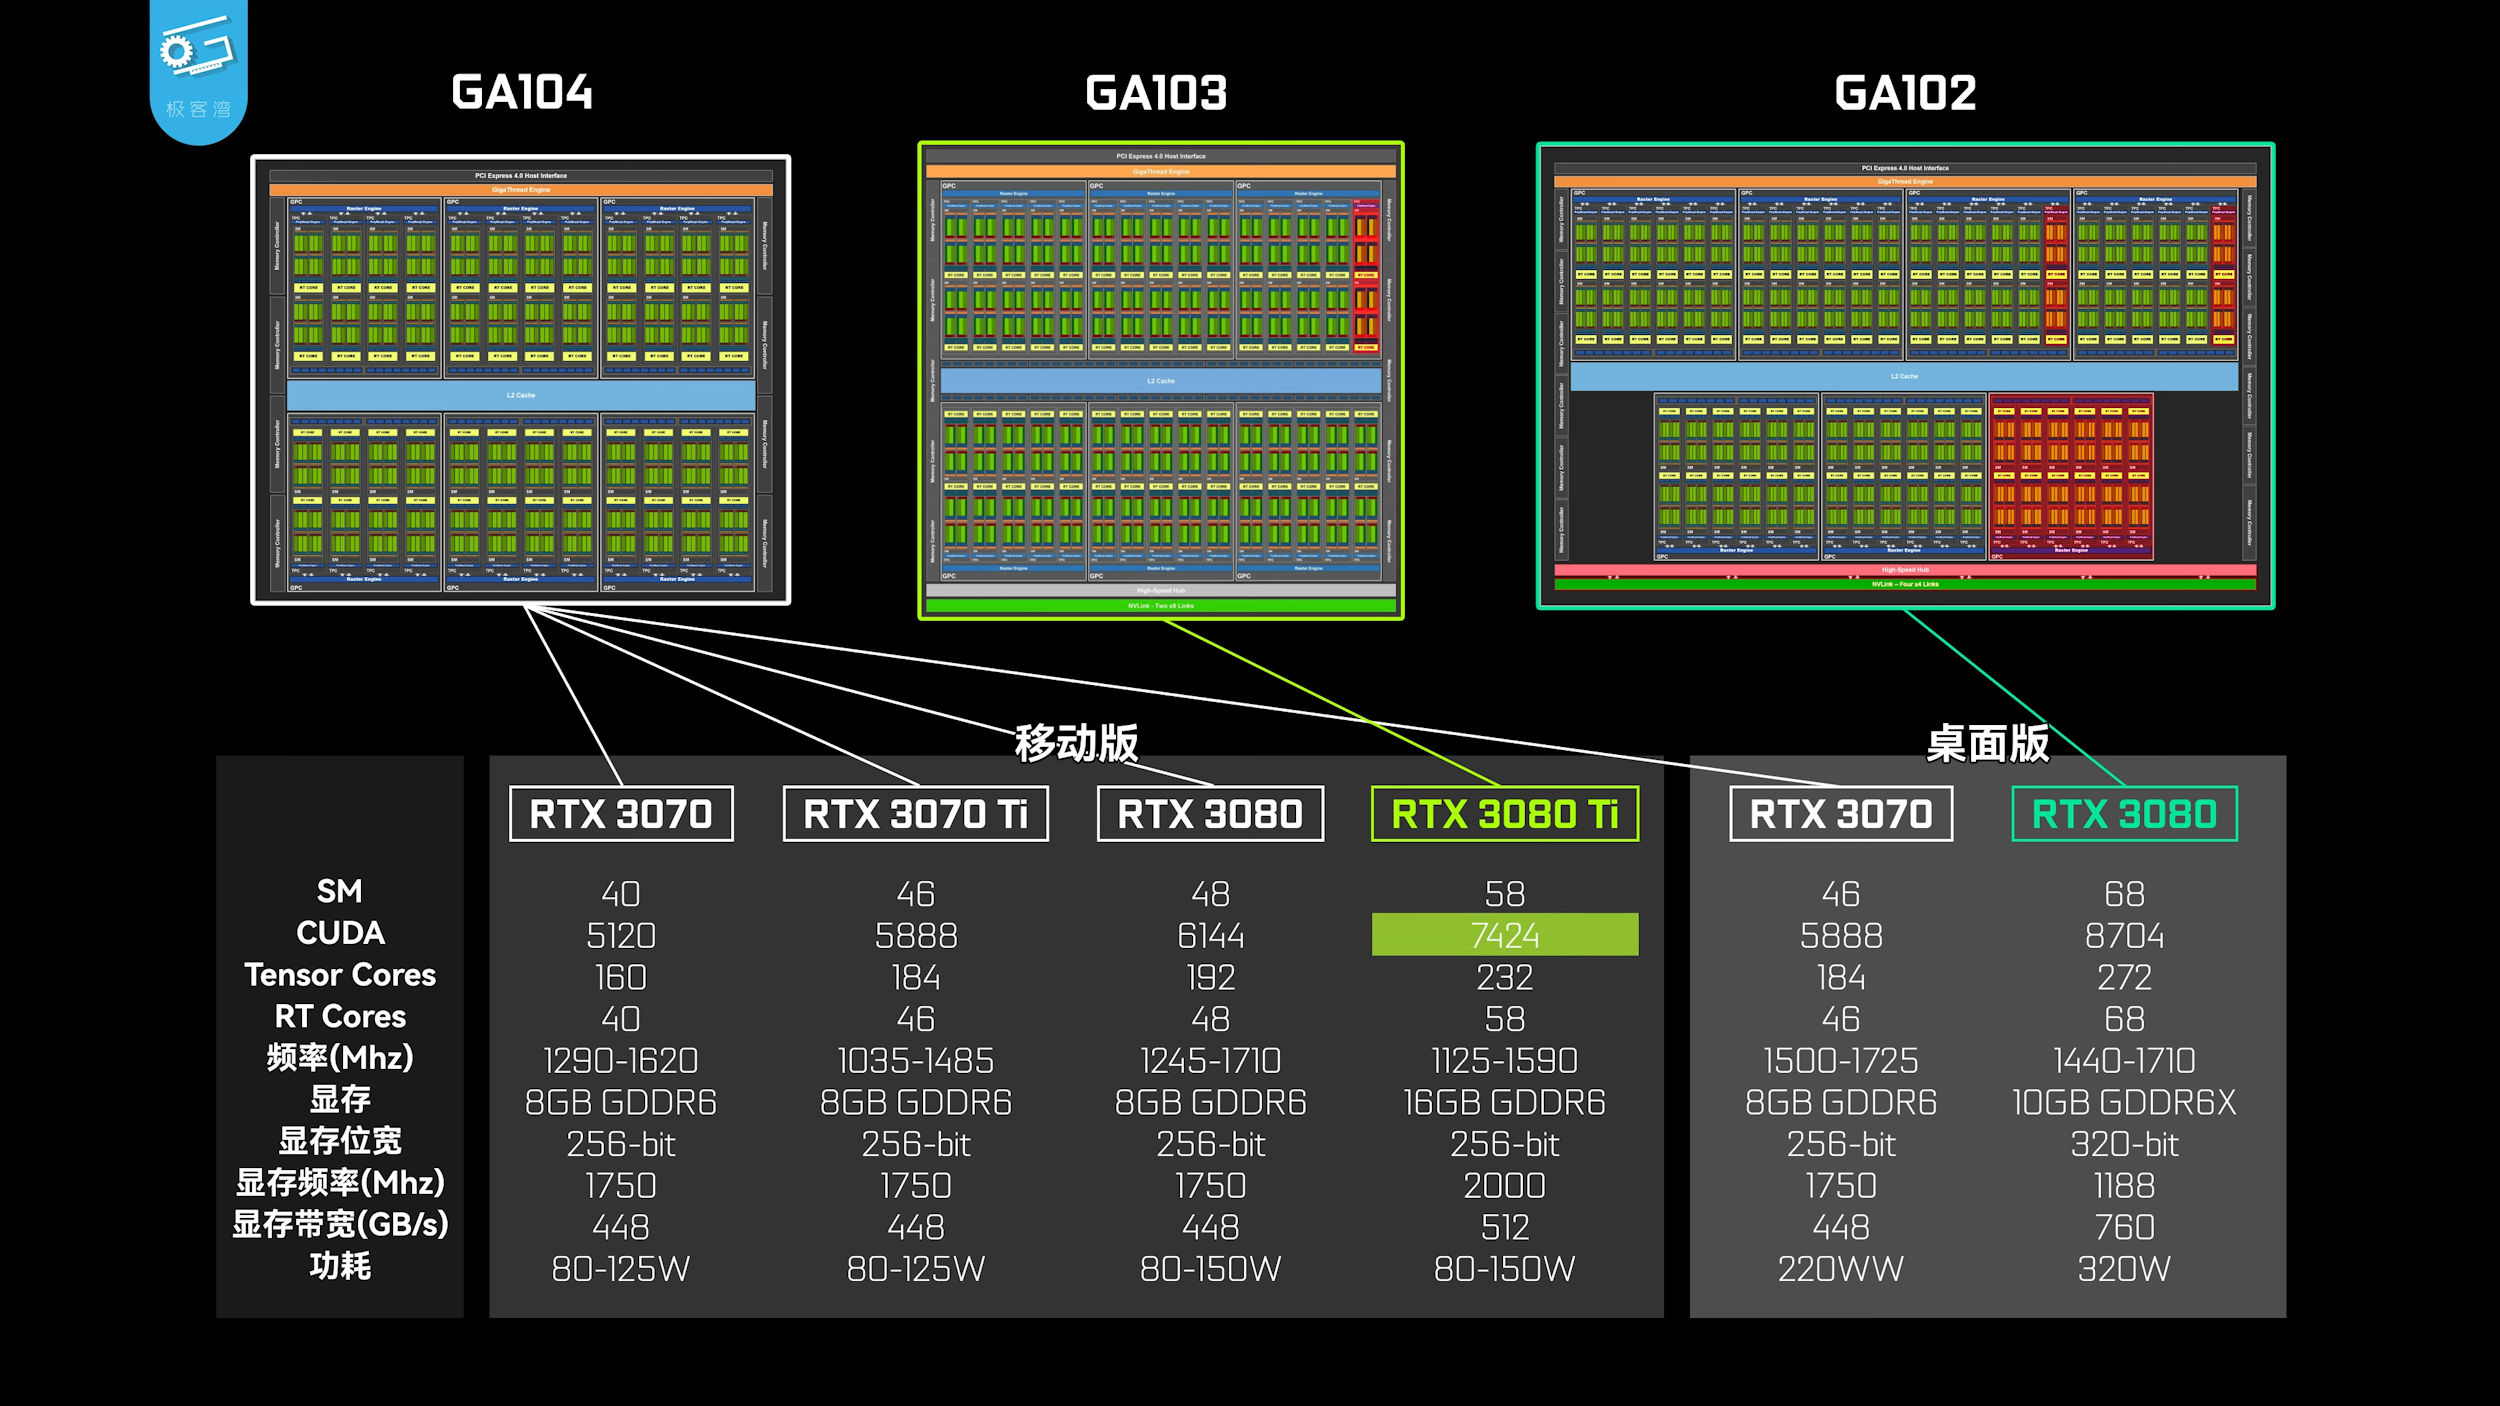 NVIDIA-GA104-GA103-GA102-Comparison.jpg